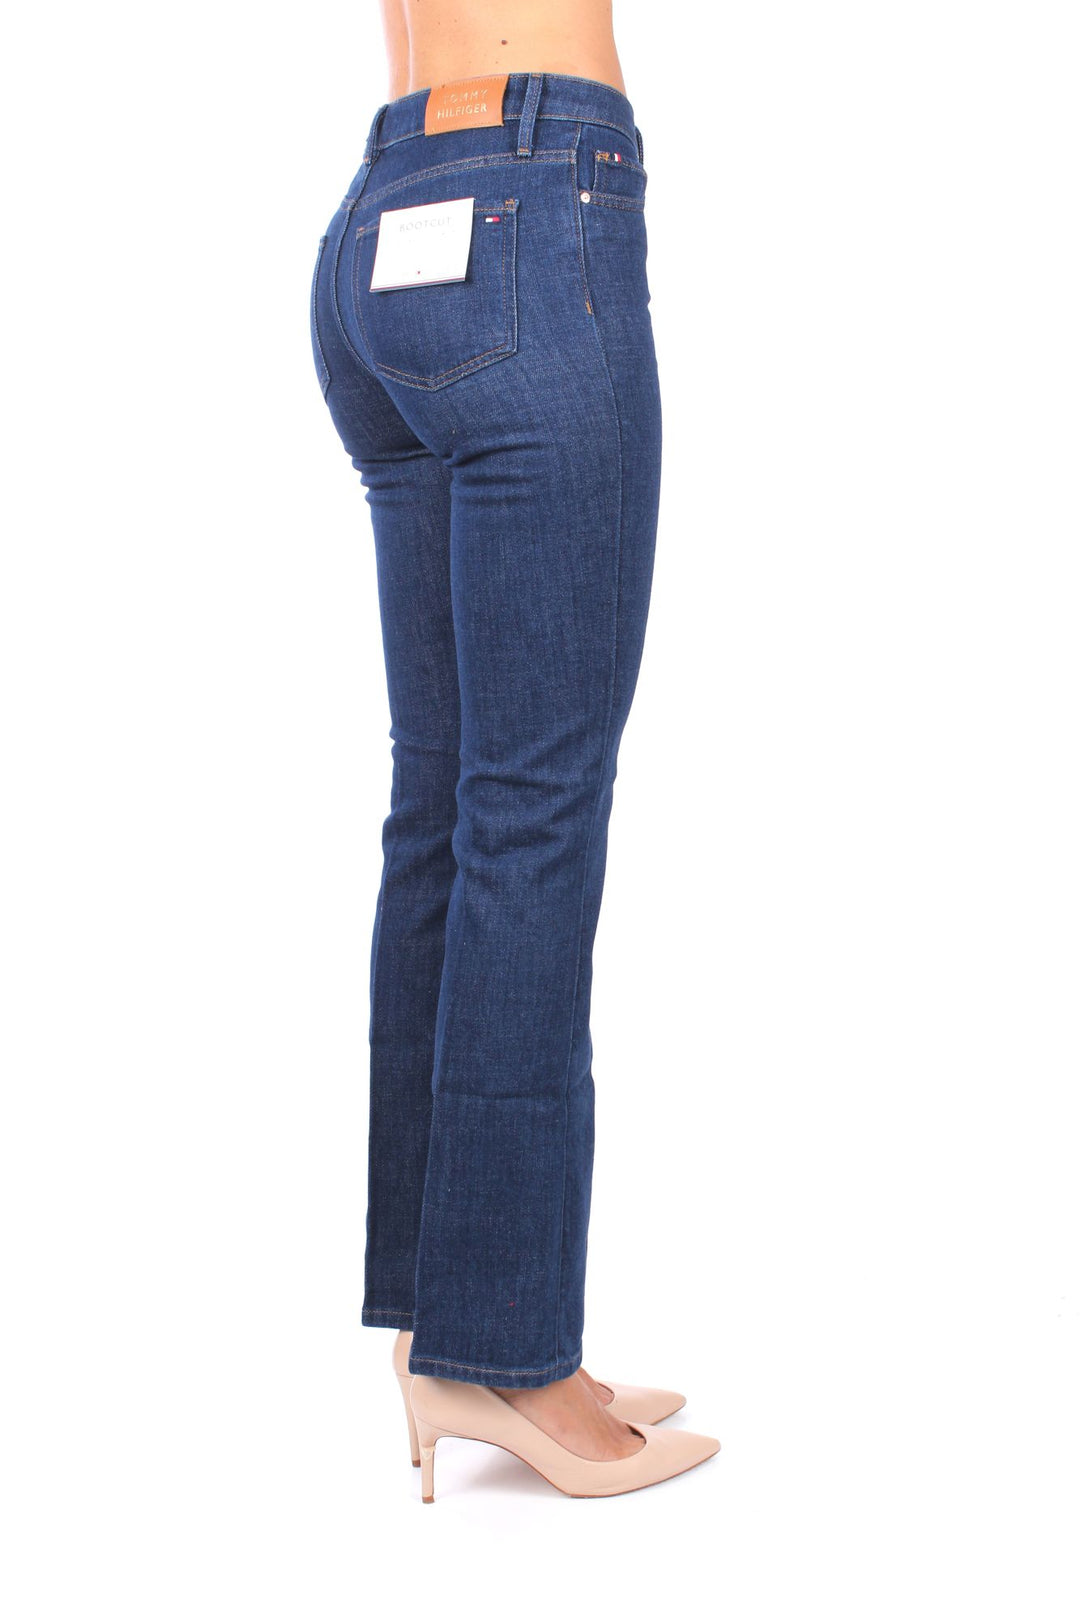 Tommy Hilfiger WW0WW35161 Jeans Bootcut